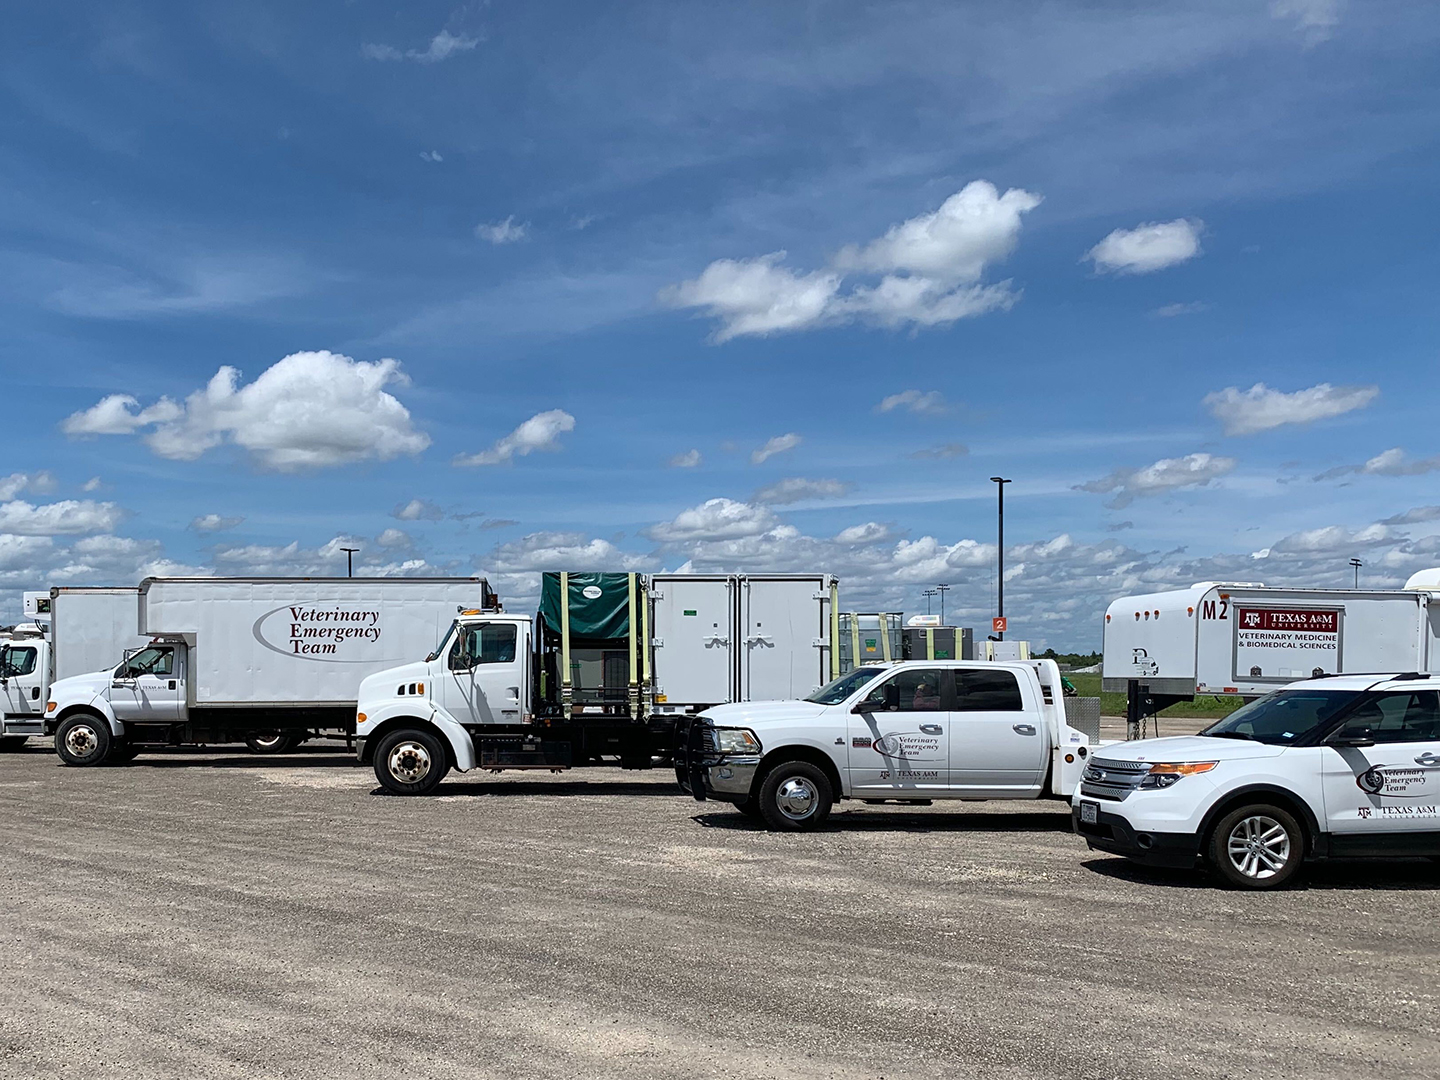 A row of Veterinary Emergency Team trucks under a clear, blue sky